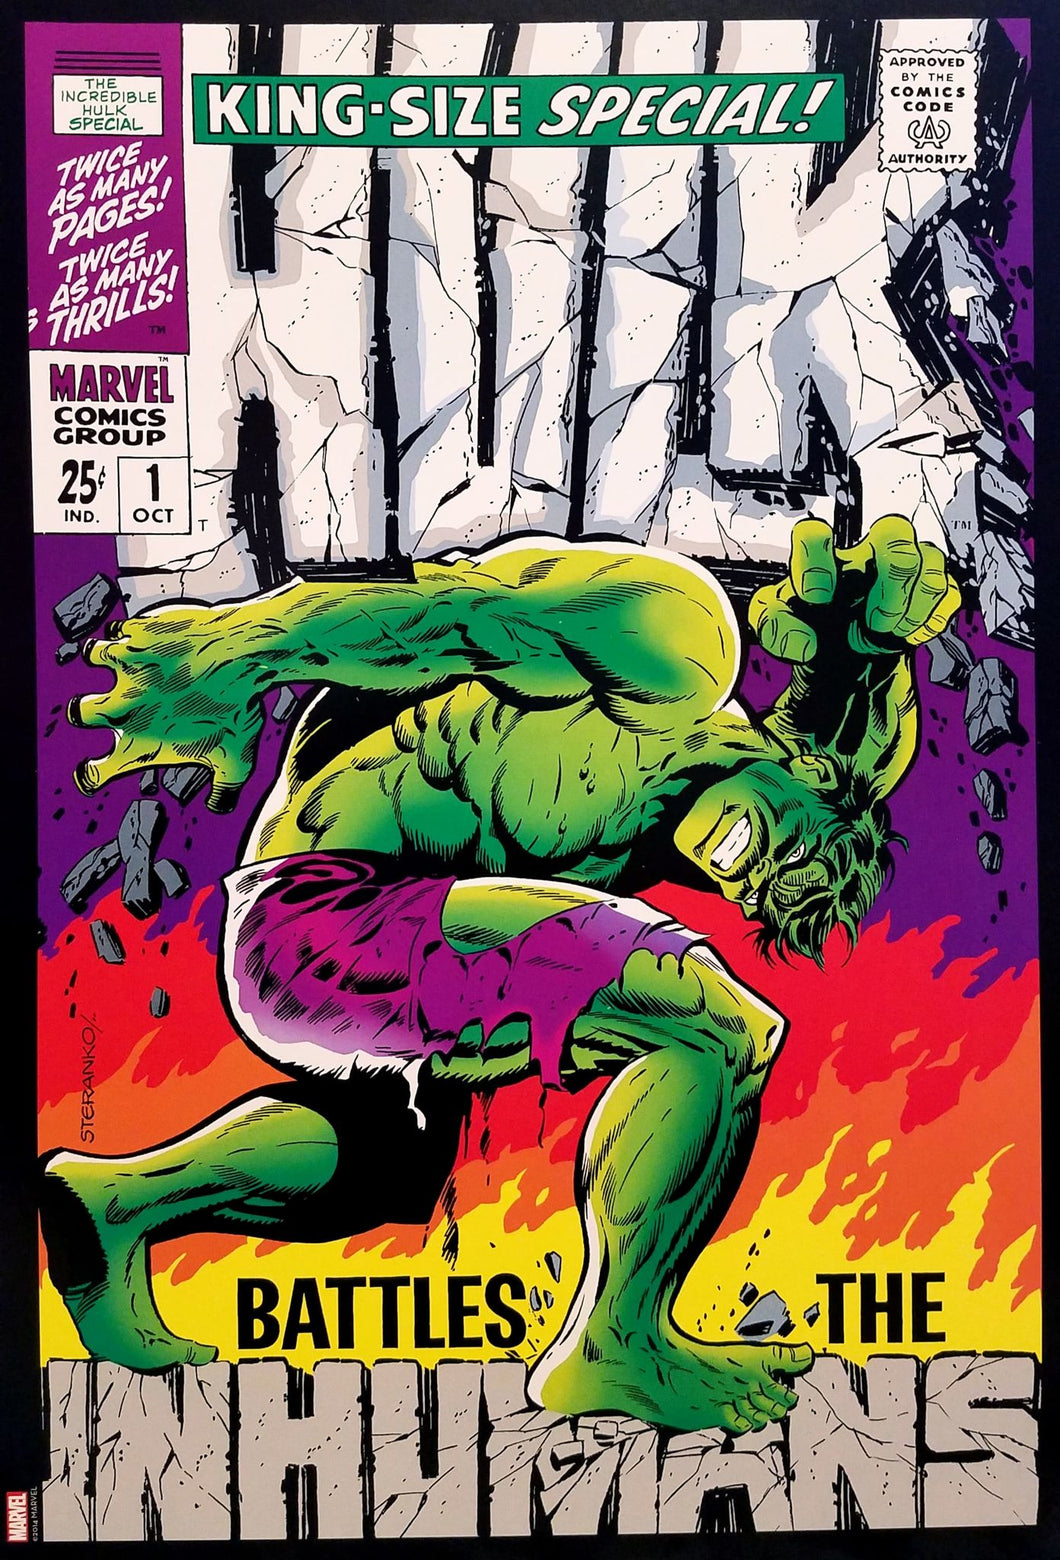 Incredible Hulk Annual #1 12x16 FRAMED Art Print by Jim Steranko, New Marvel Comics cardstock